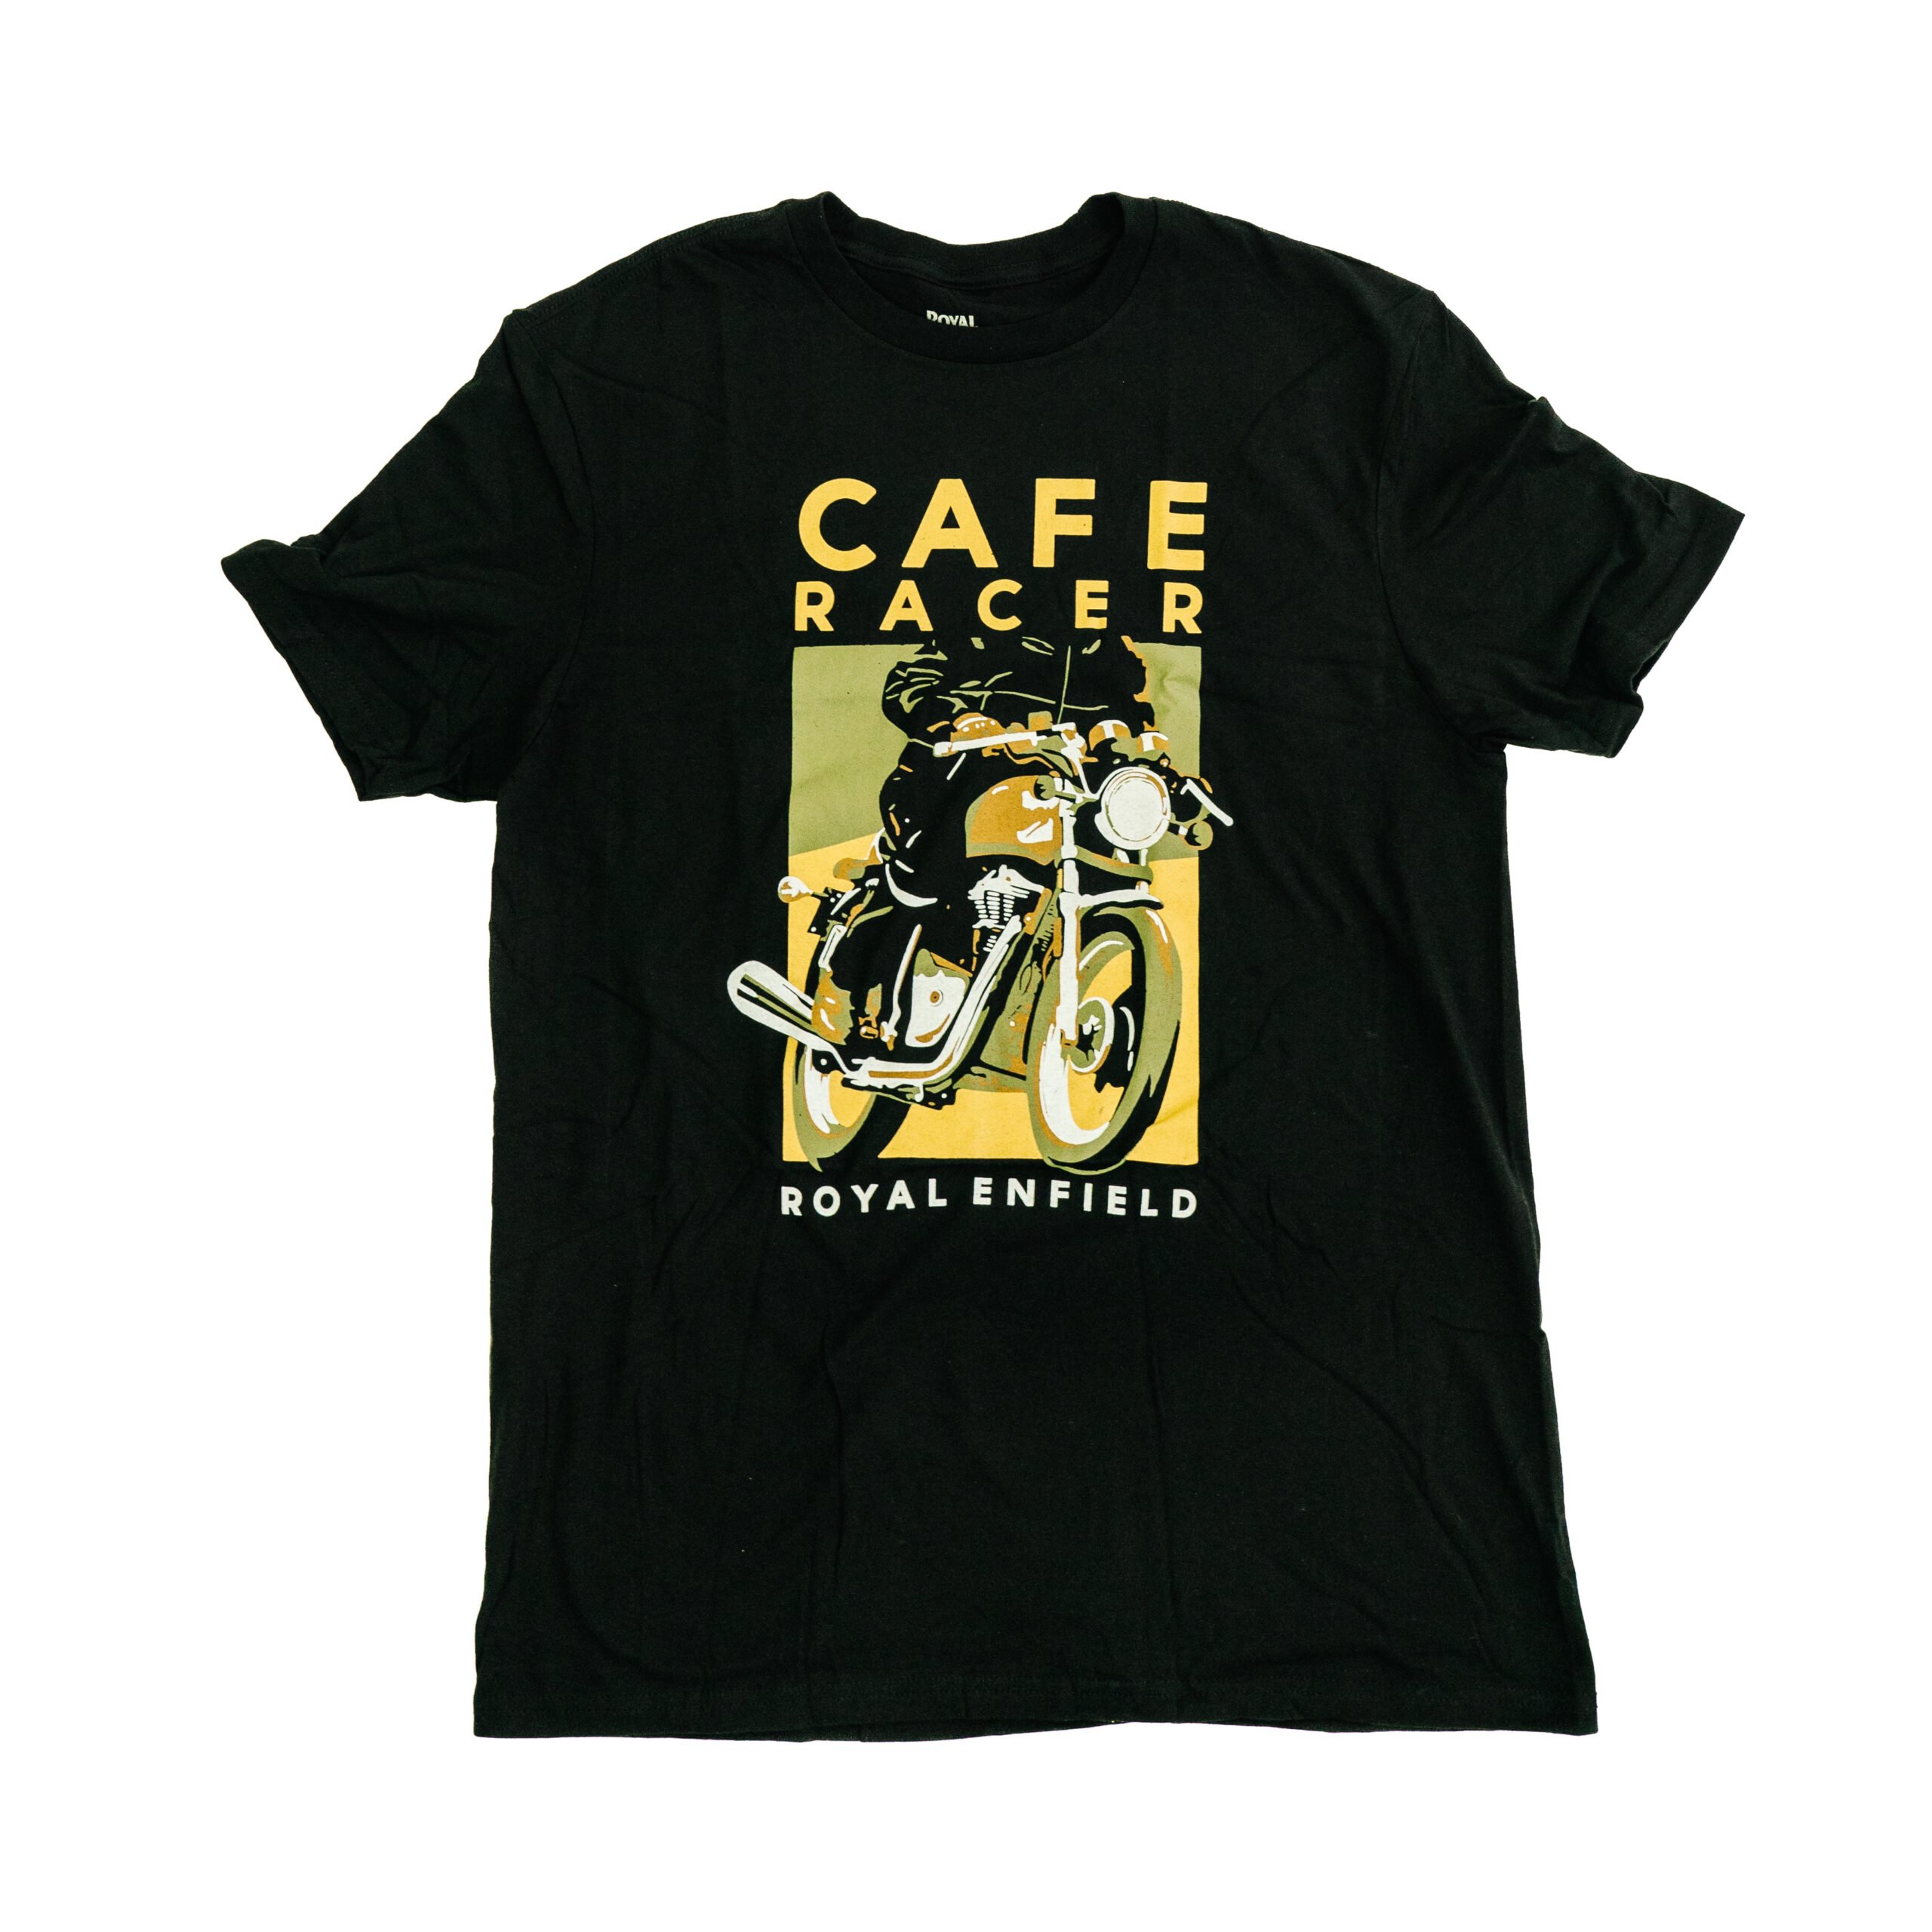 Royal Enfield “Cafe’ Racer” T-shirt, Black – Baxter Cycle